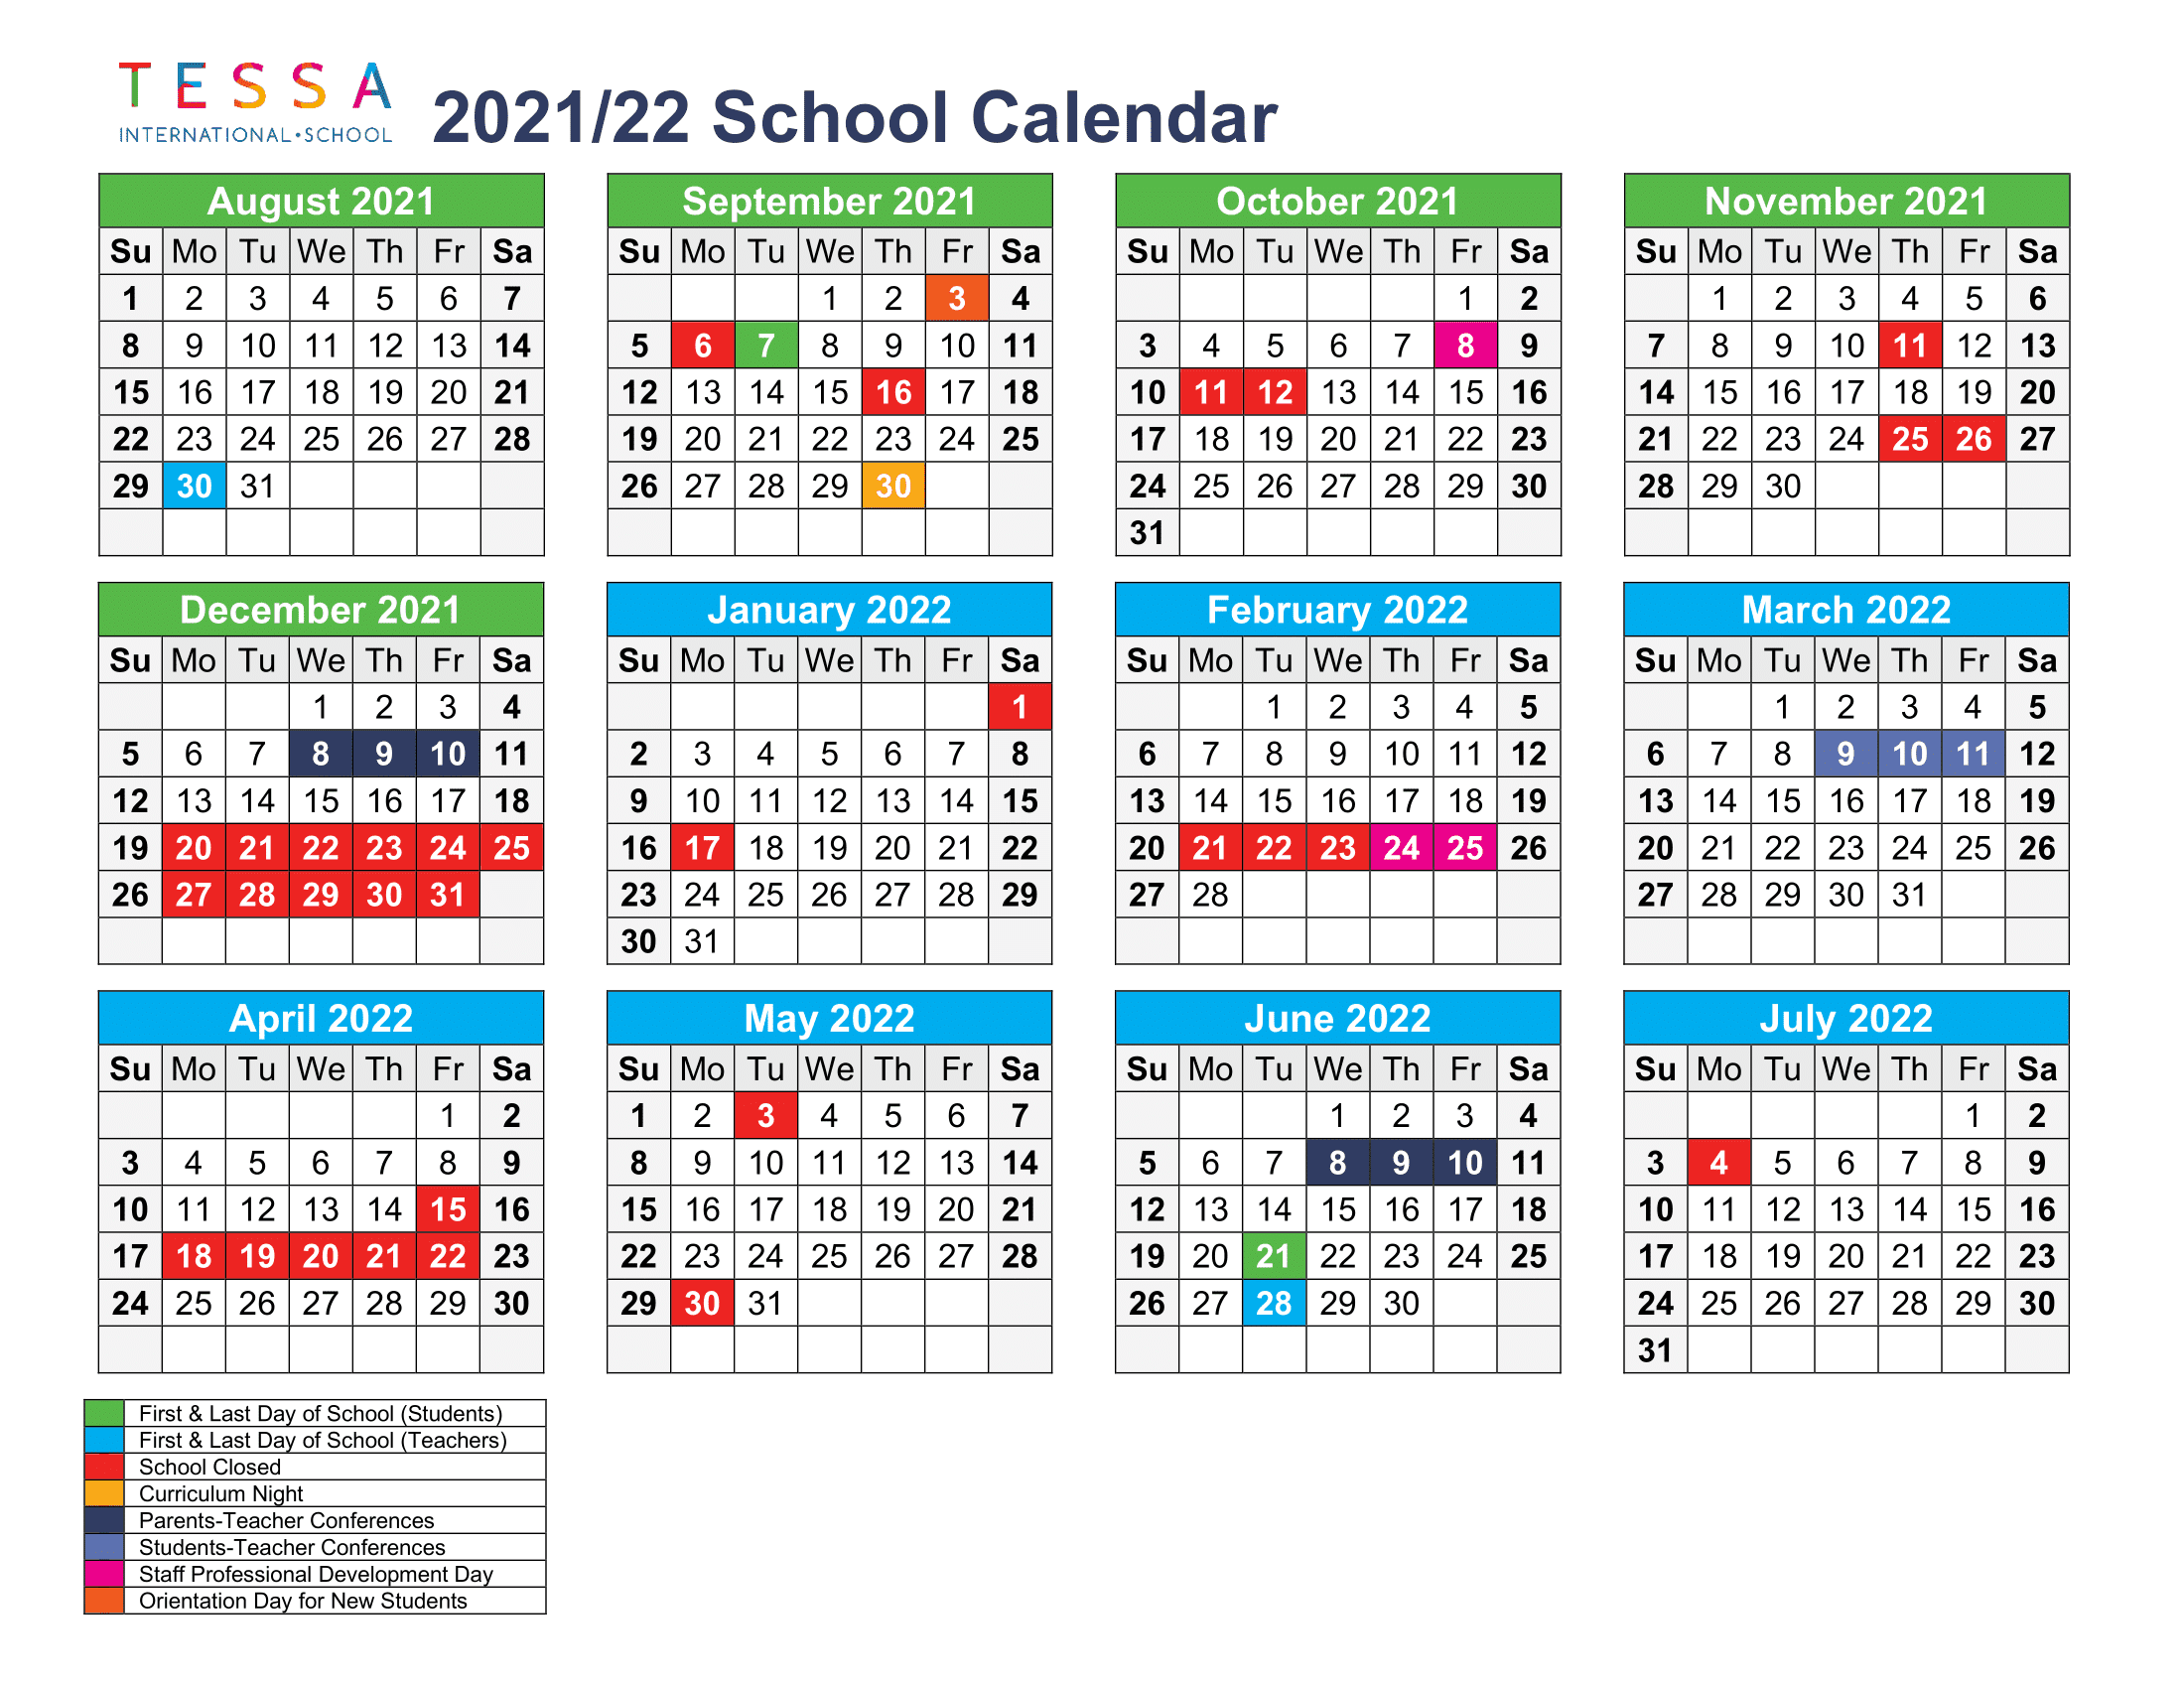 Princeton Academic Calendar Fall 2022 Academic-Calendar-2021-2022-1 - Tessa International School